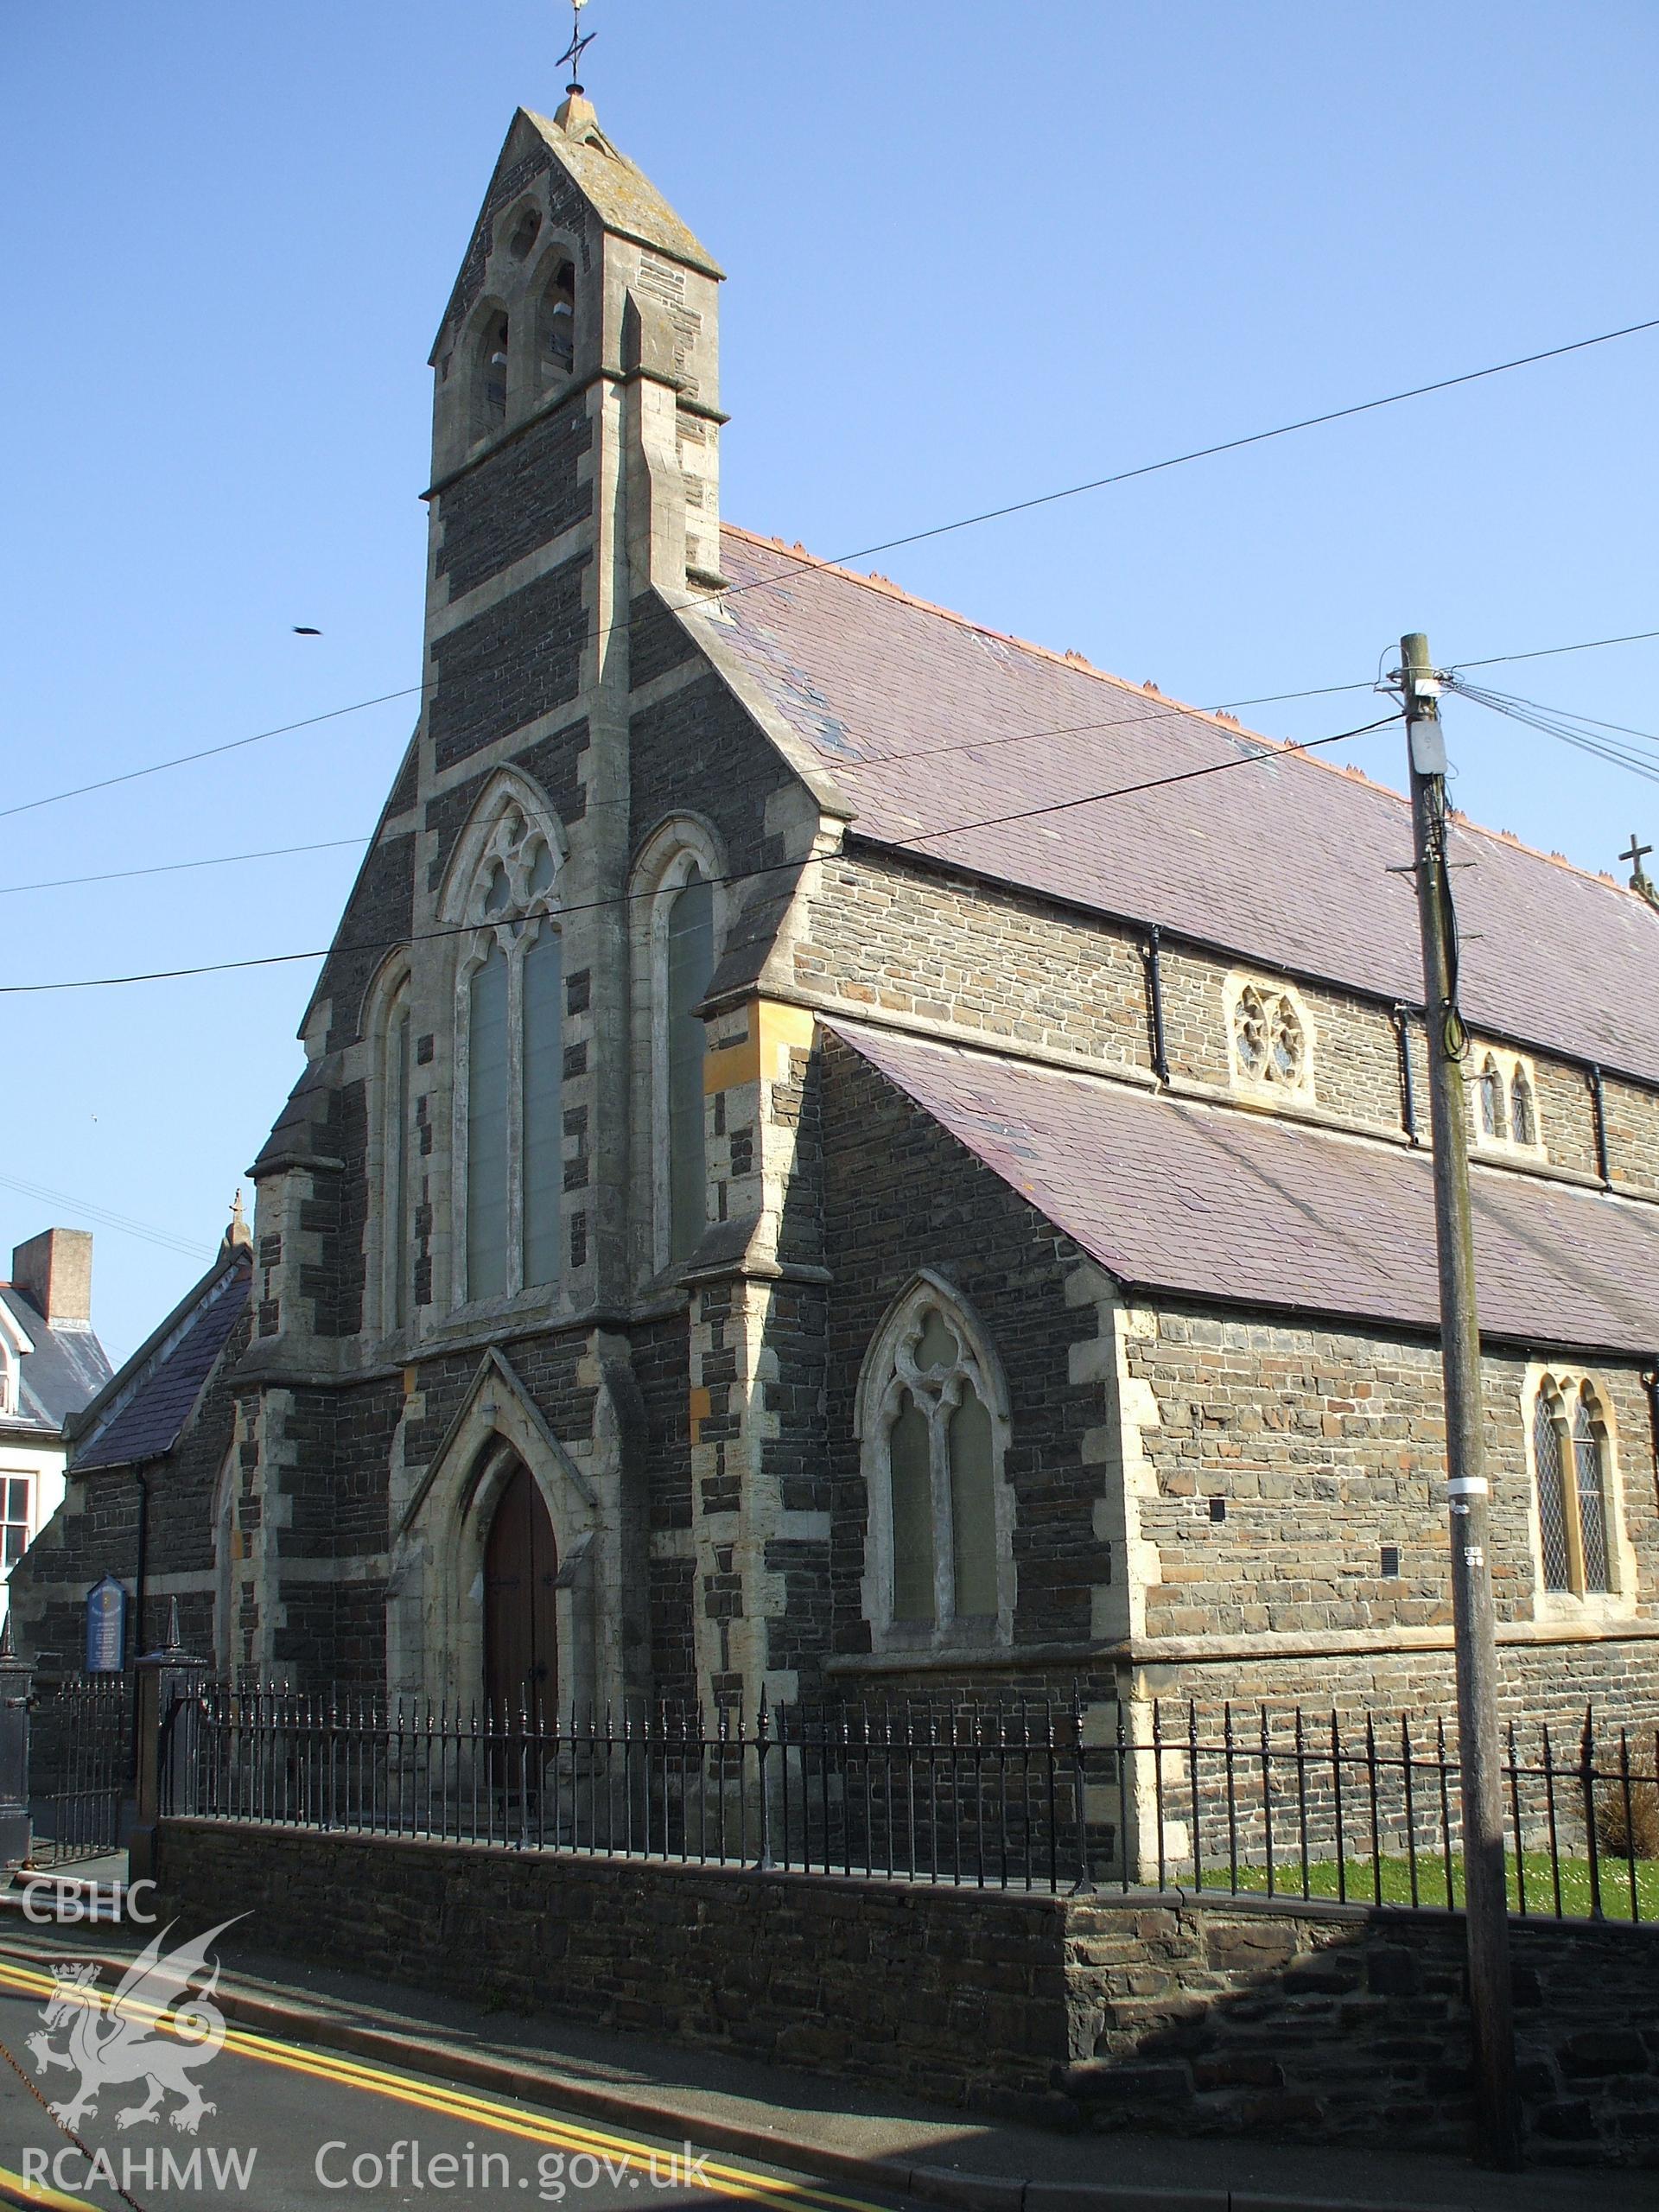 Colour digital photograph of the exterior of St. Mary's Church, Aberystwyth.